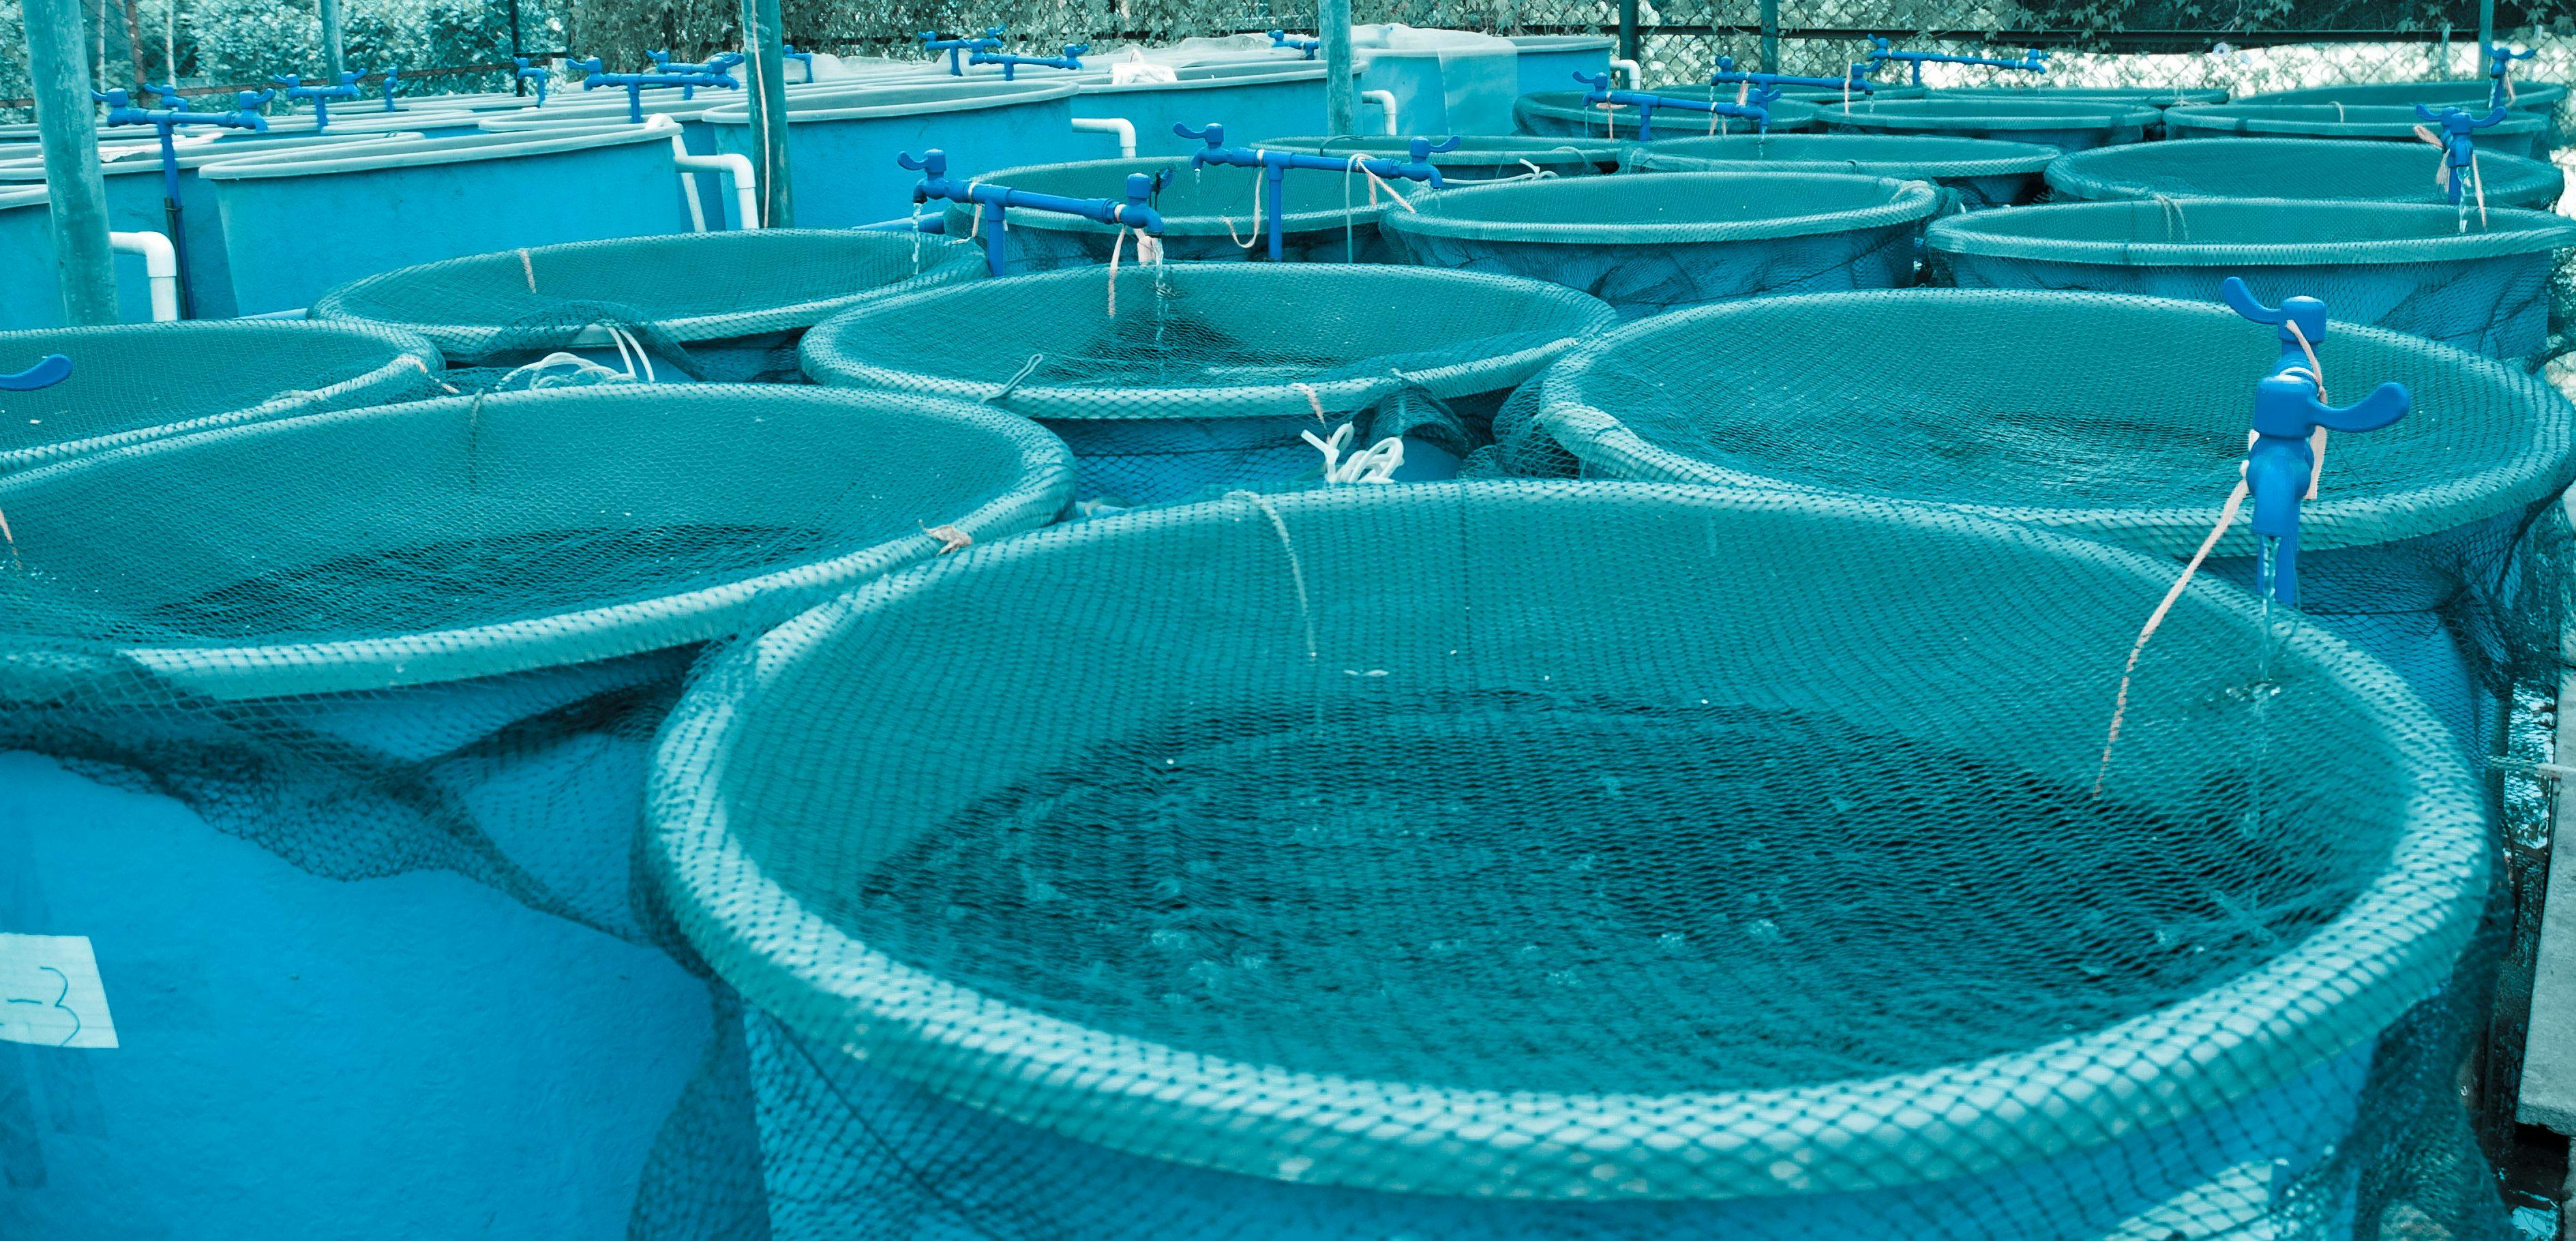 Agriculture aquaculture farm | Image Credit: © defun - stock.adobe.com